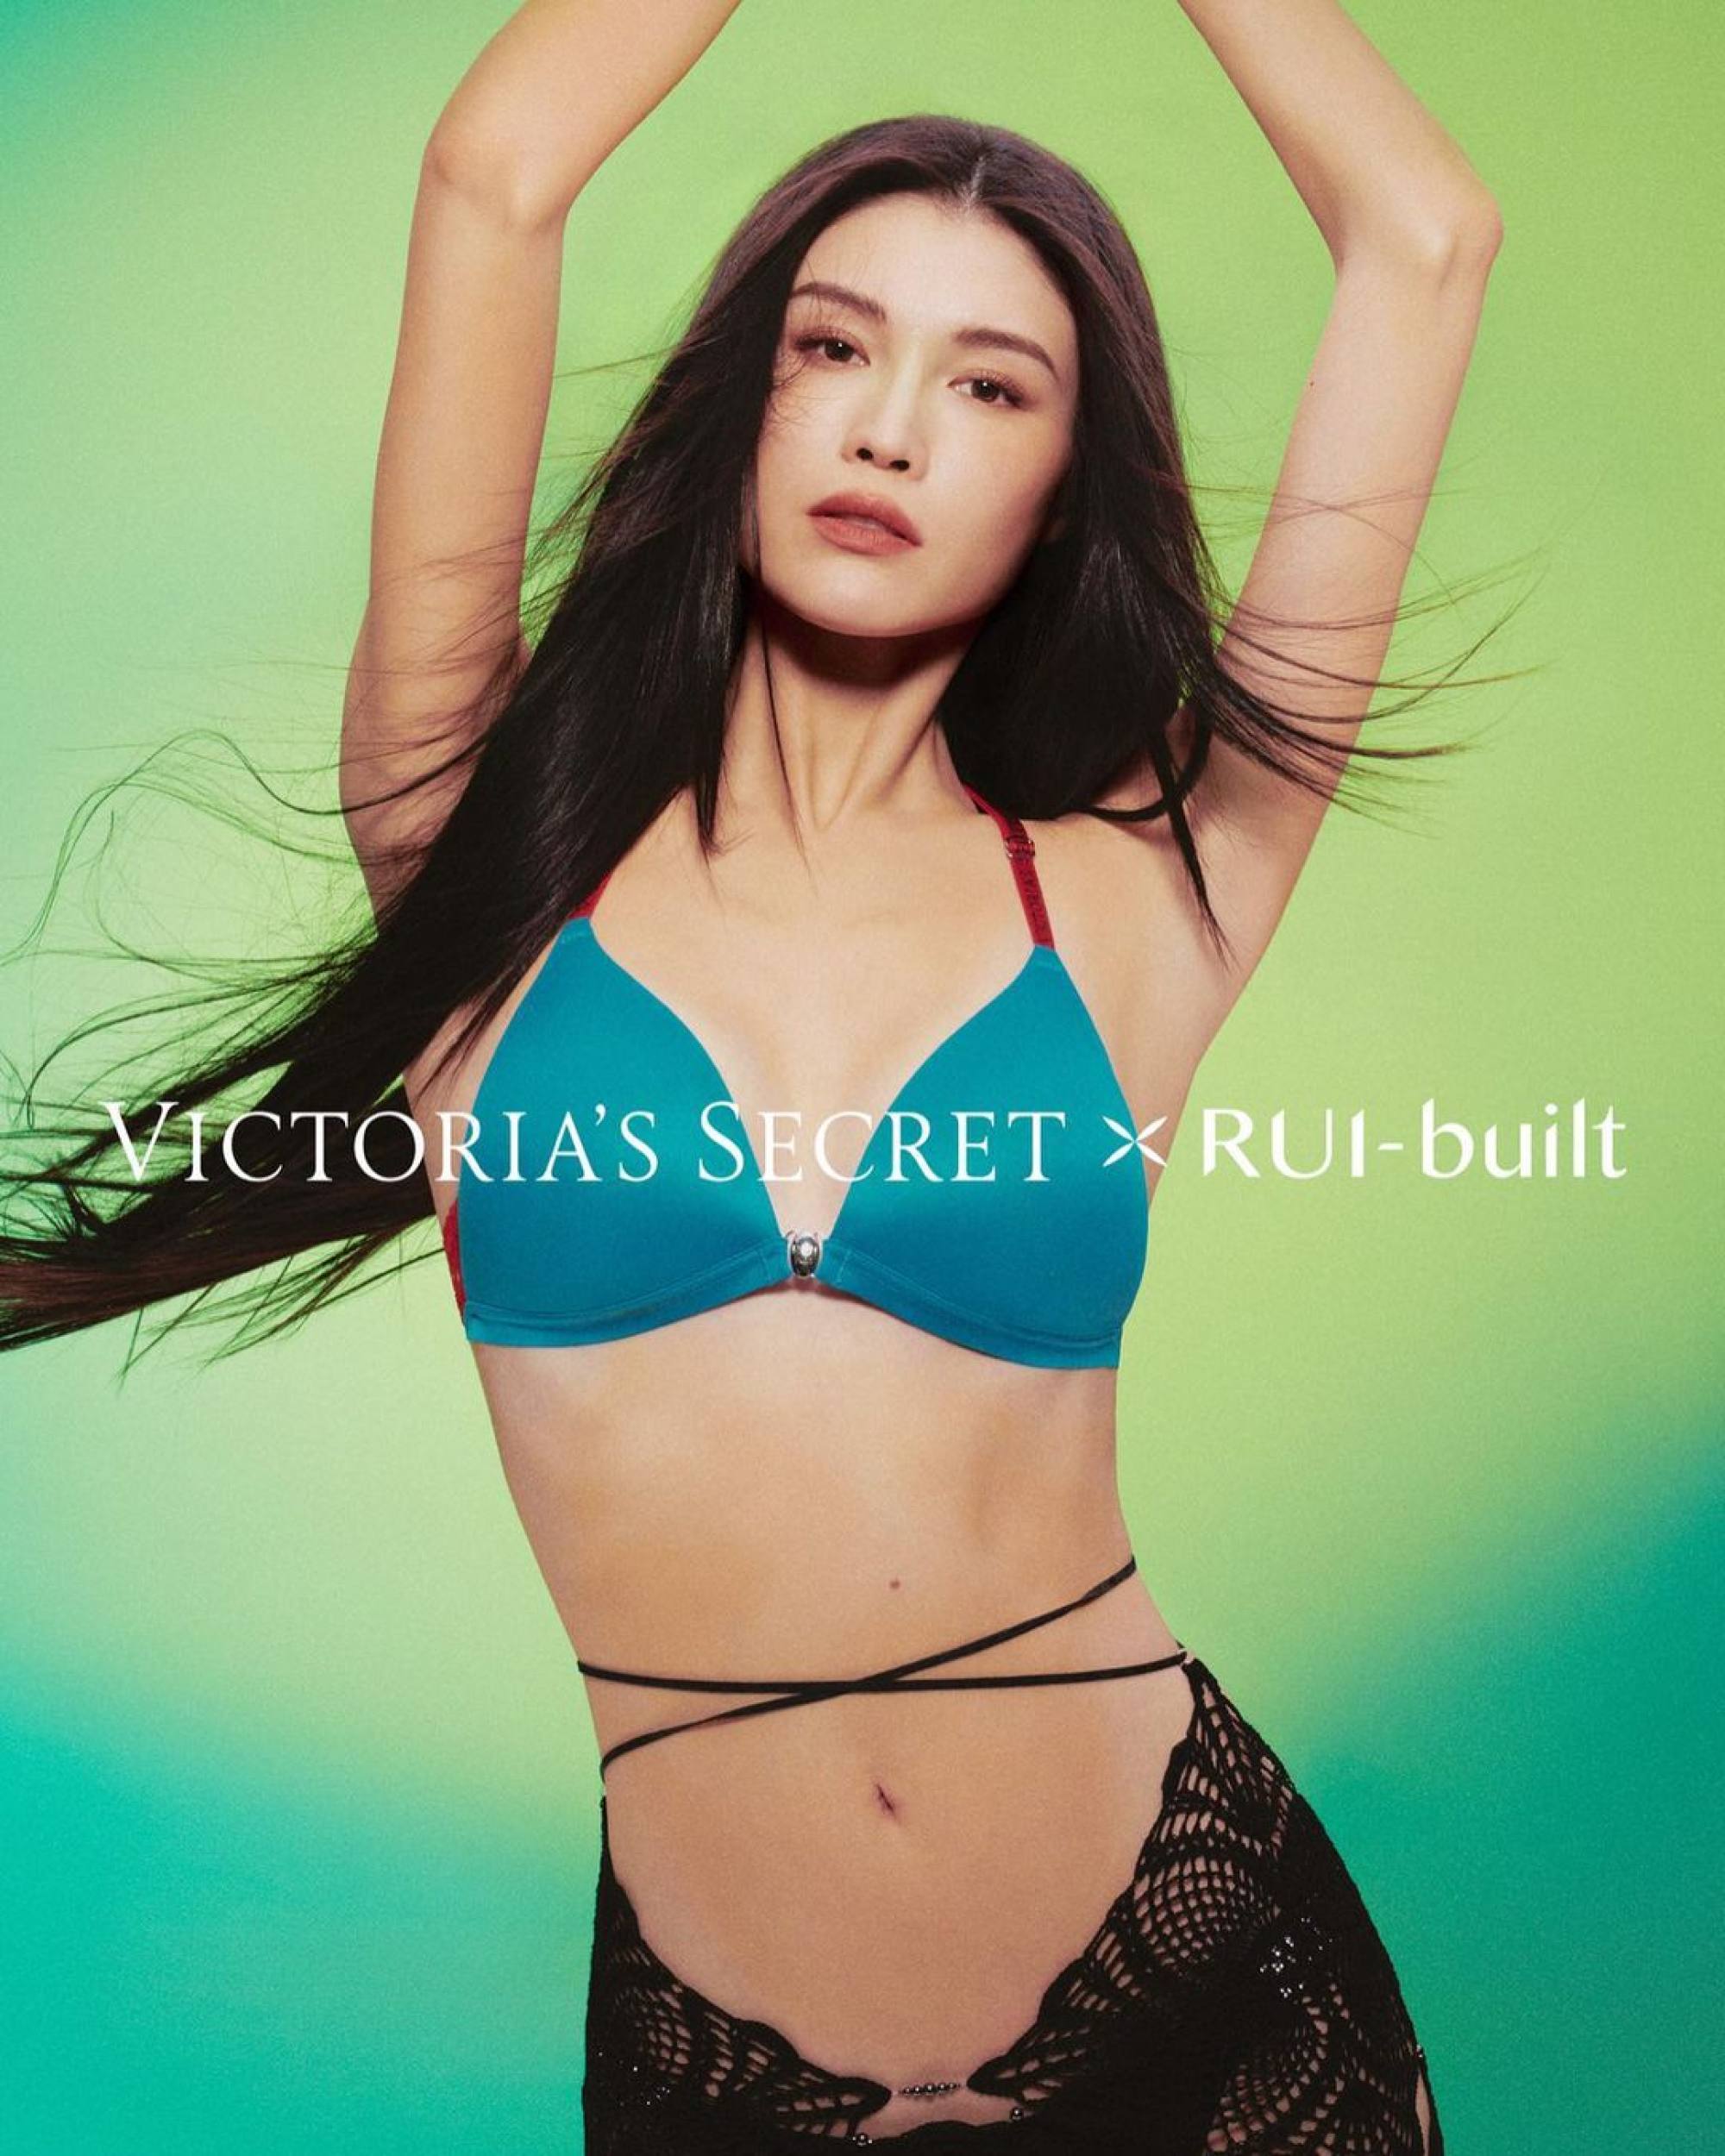 Sex sells: China's Rui Zhou collaborates with Victoria's Secret